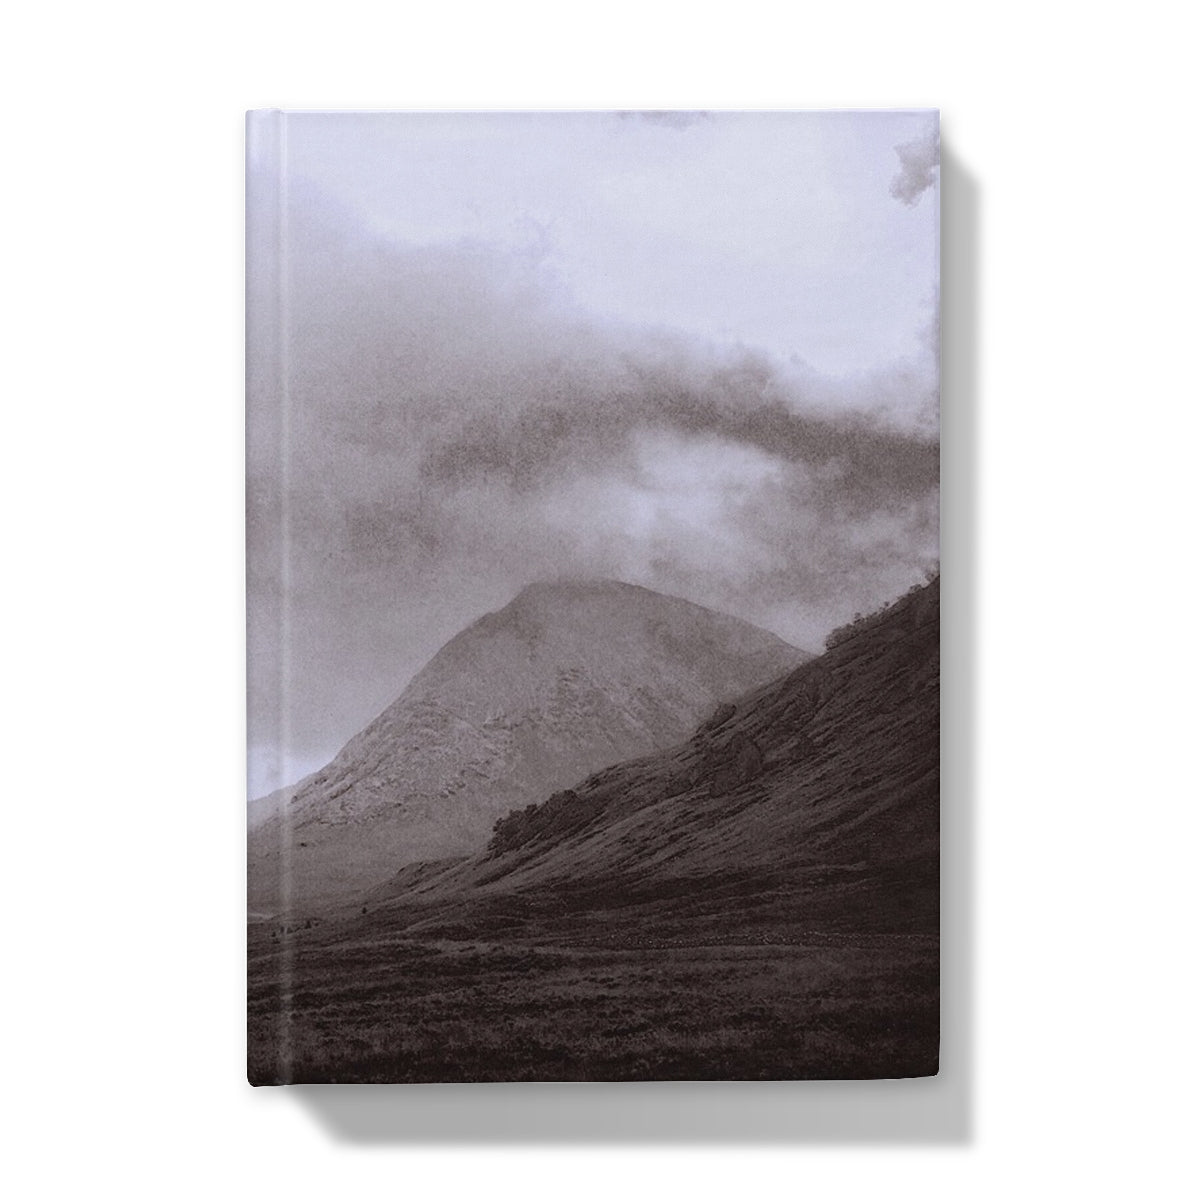 Glencoe Mist Art Gifts Hardback Journal-Journals & Notebooks-Glencoe Art Gallery-5"x7"-Lined-Paintings, Prints, Homeware, Art Gifts From Scotland By Scottish Artist Kevin Hunter